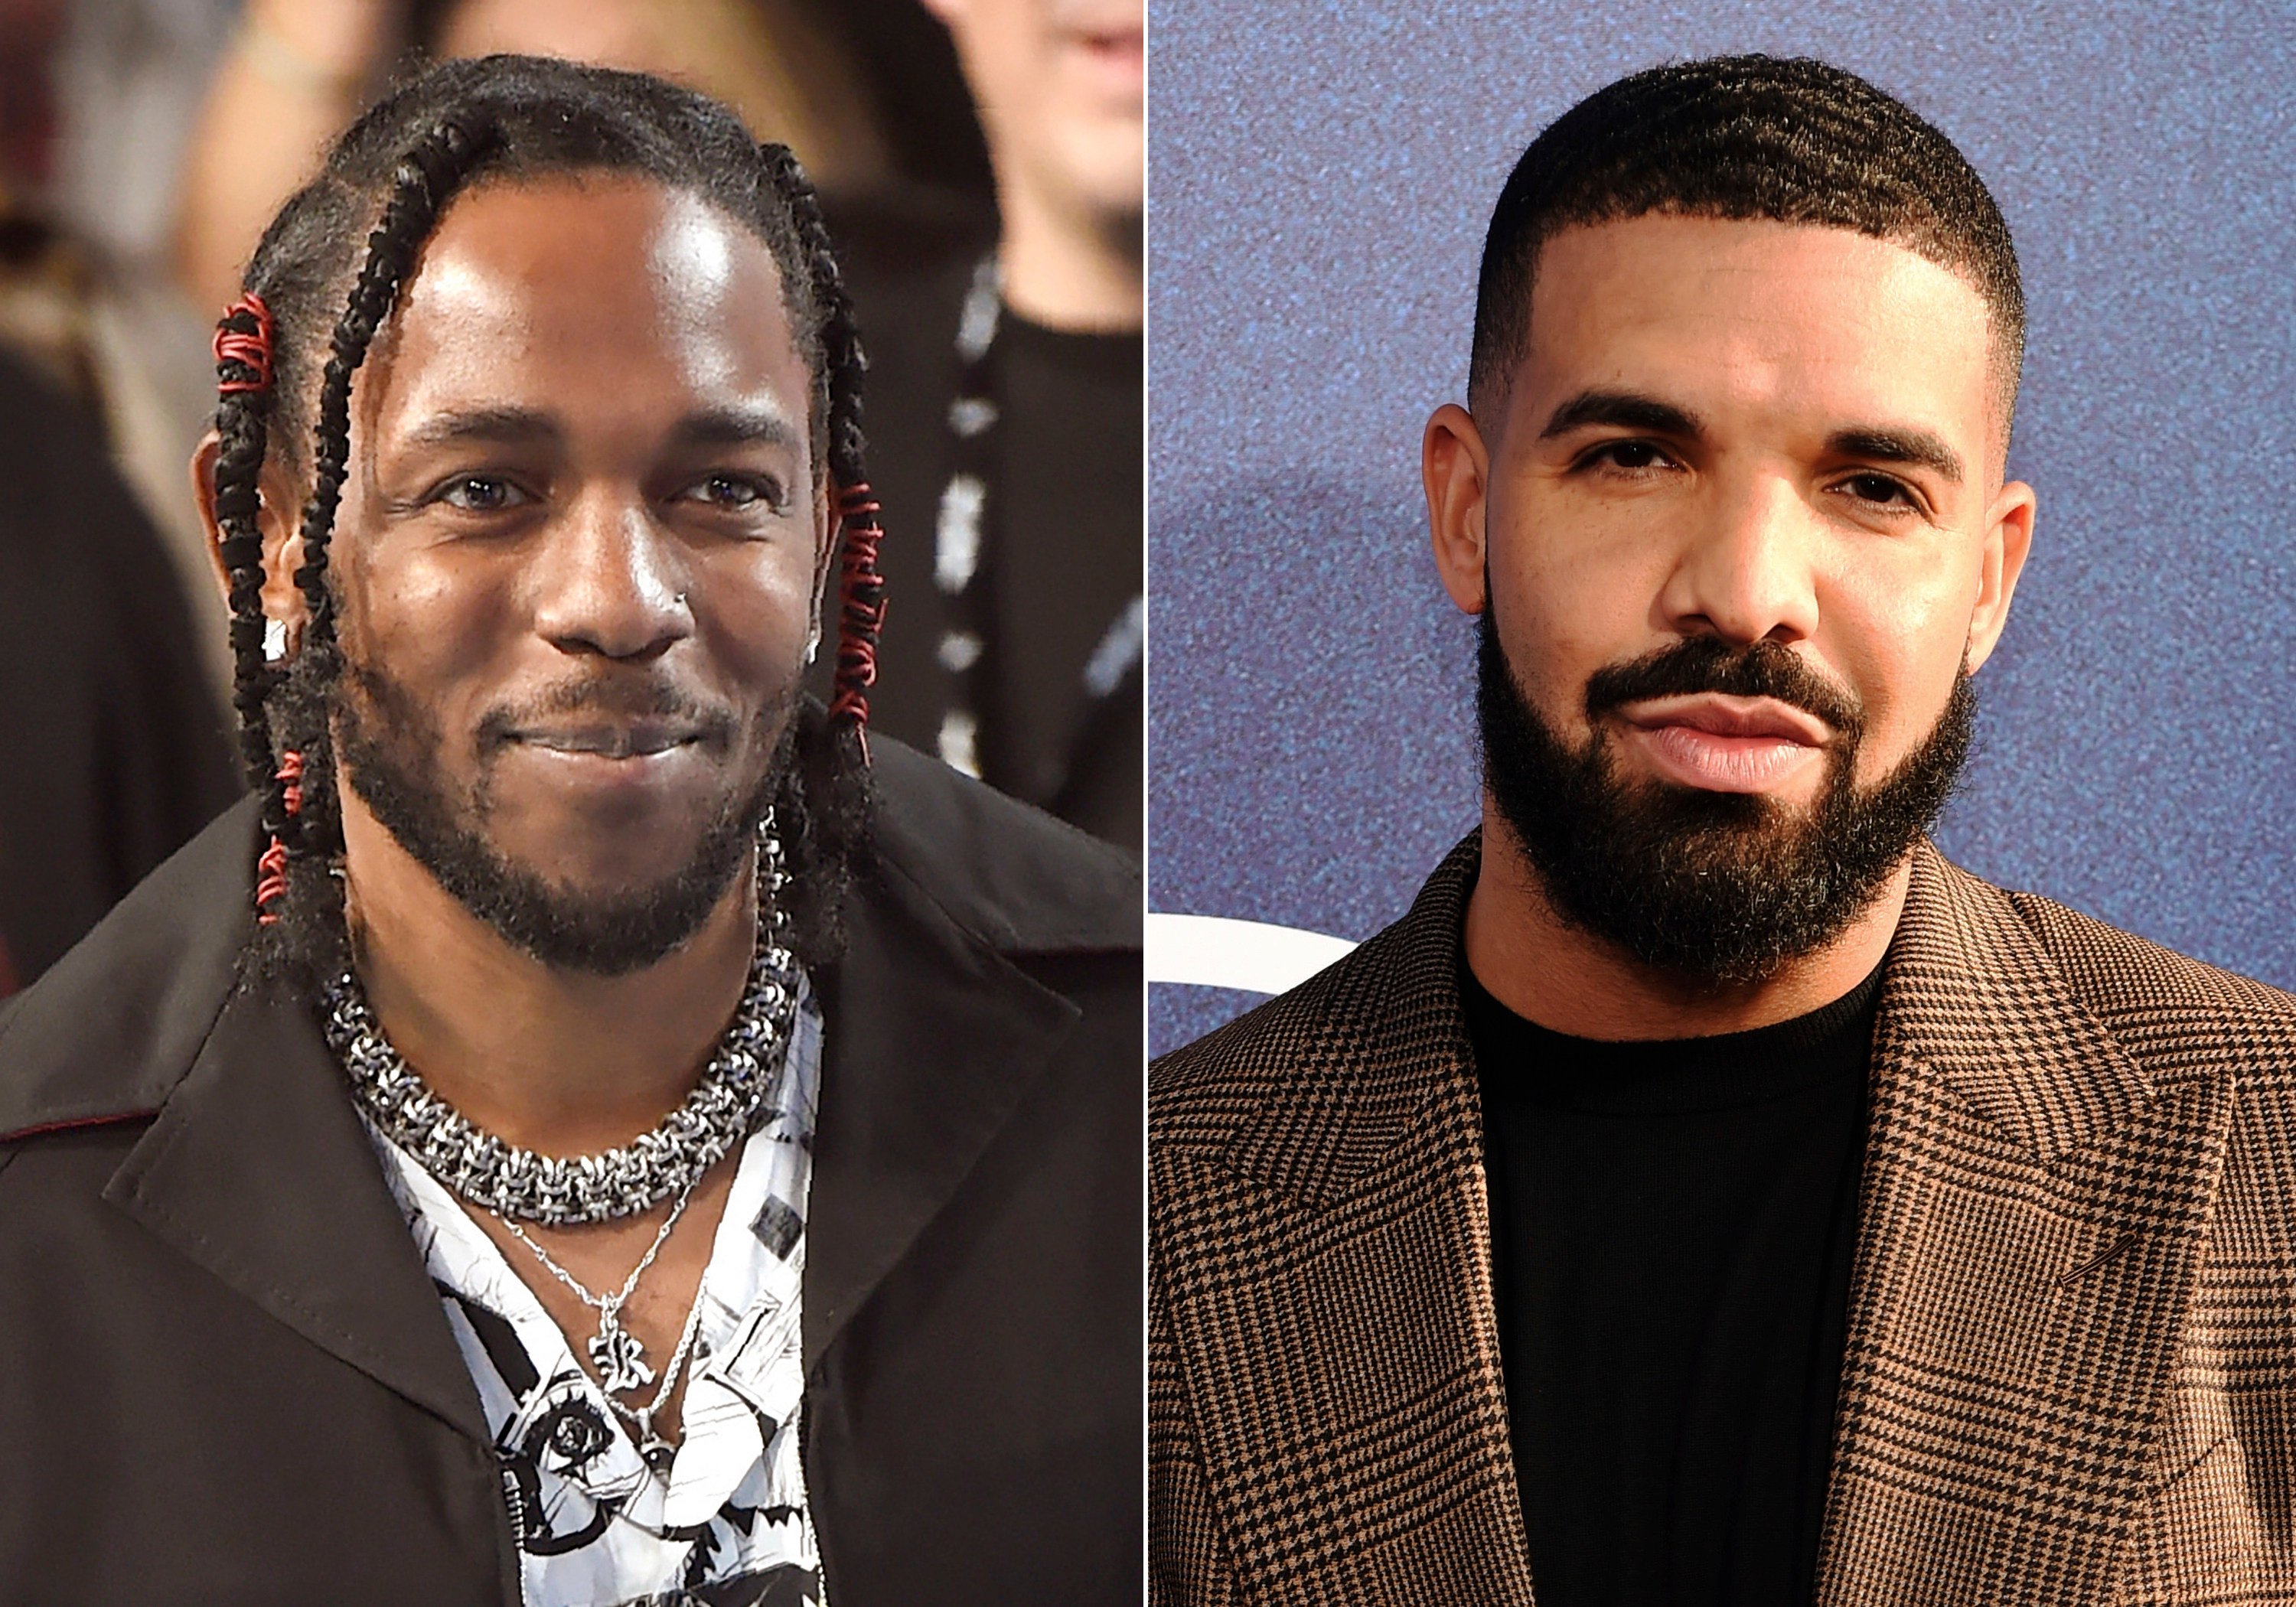 Kendrick Lamar and Drake’s feud is escalating. Photo: AP